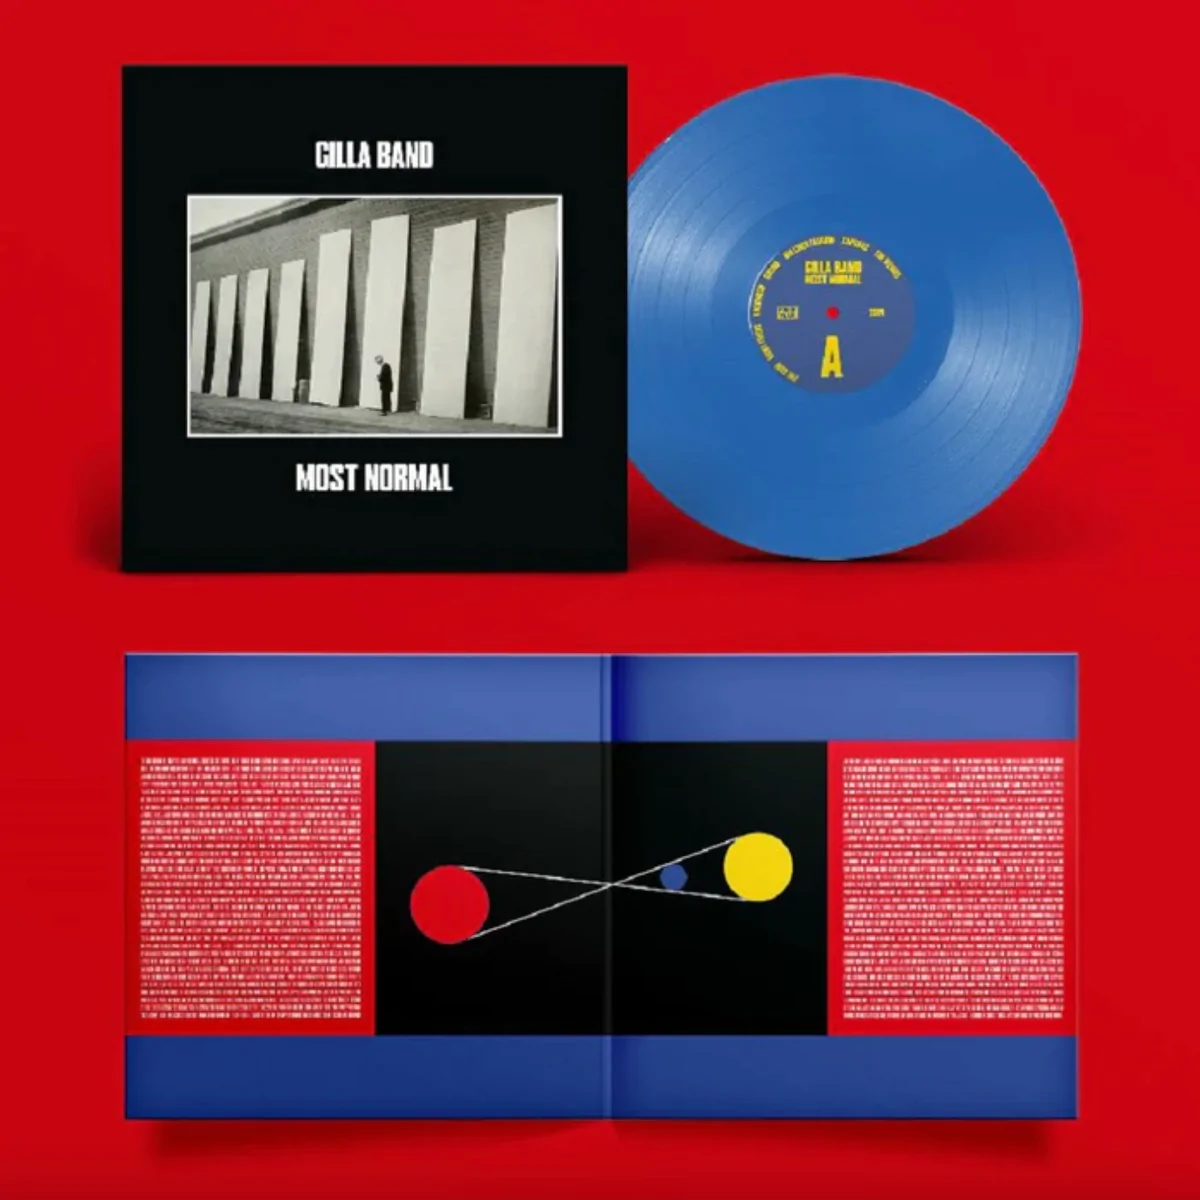 Gilla Band "Most Normal" Blue LP